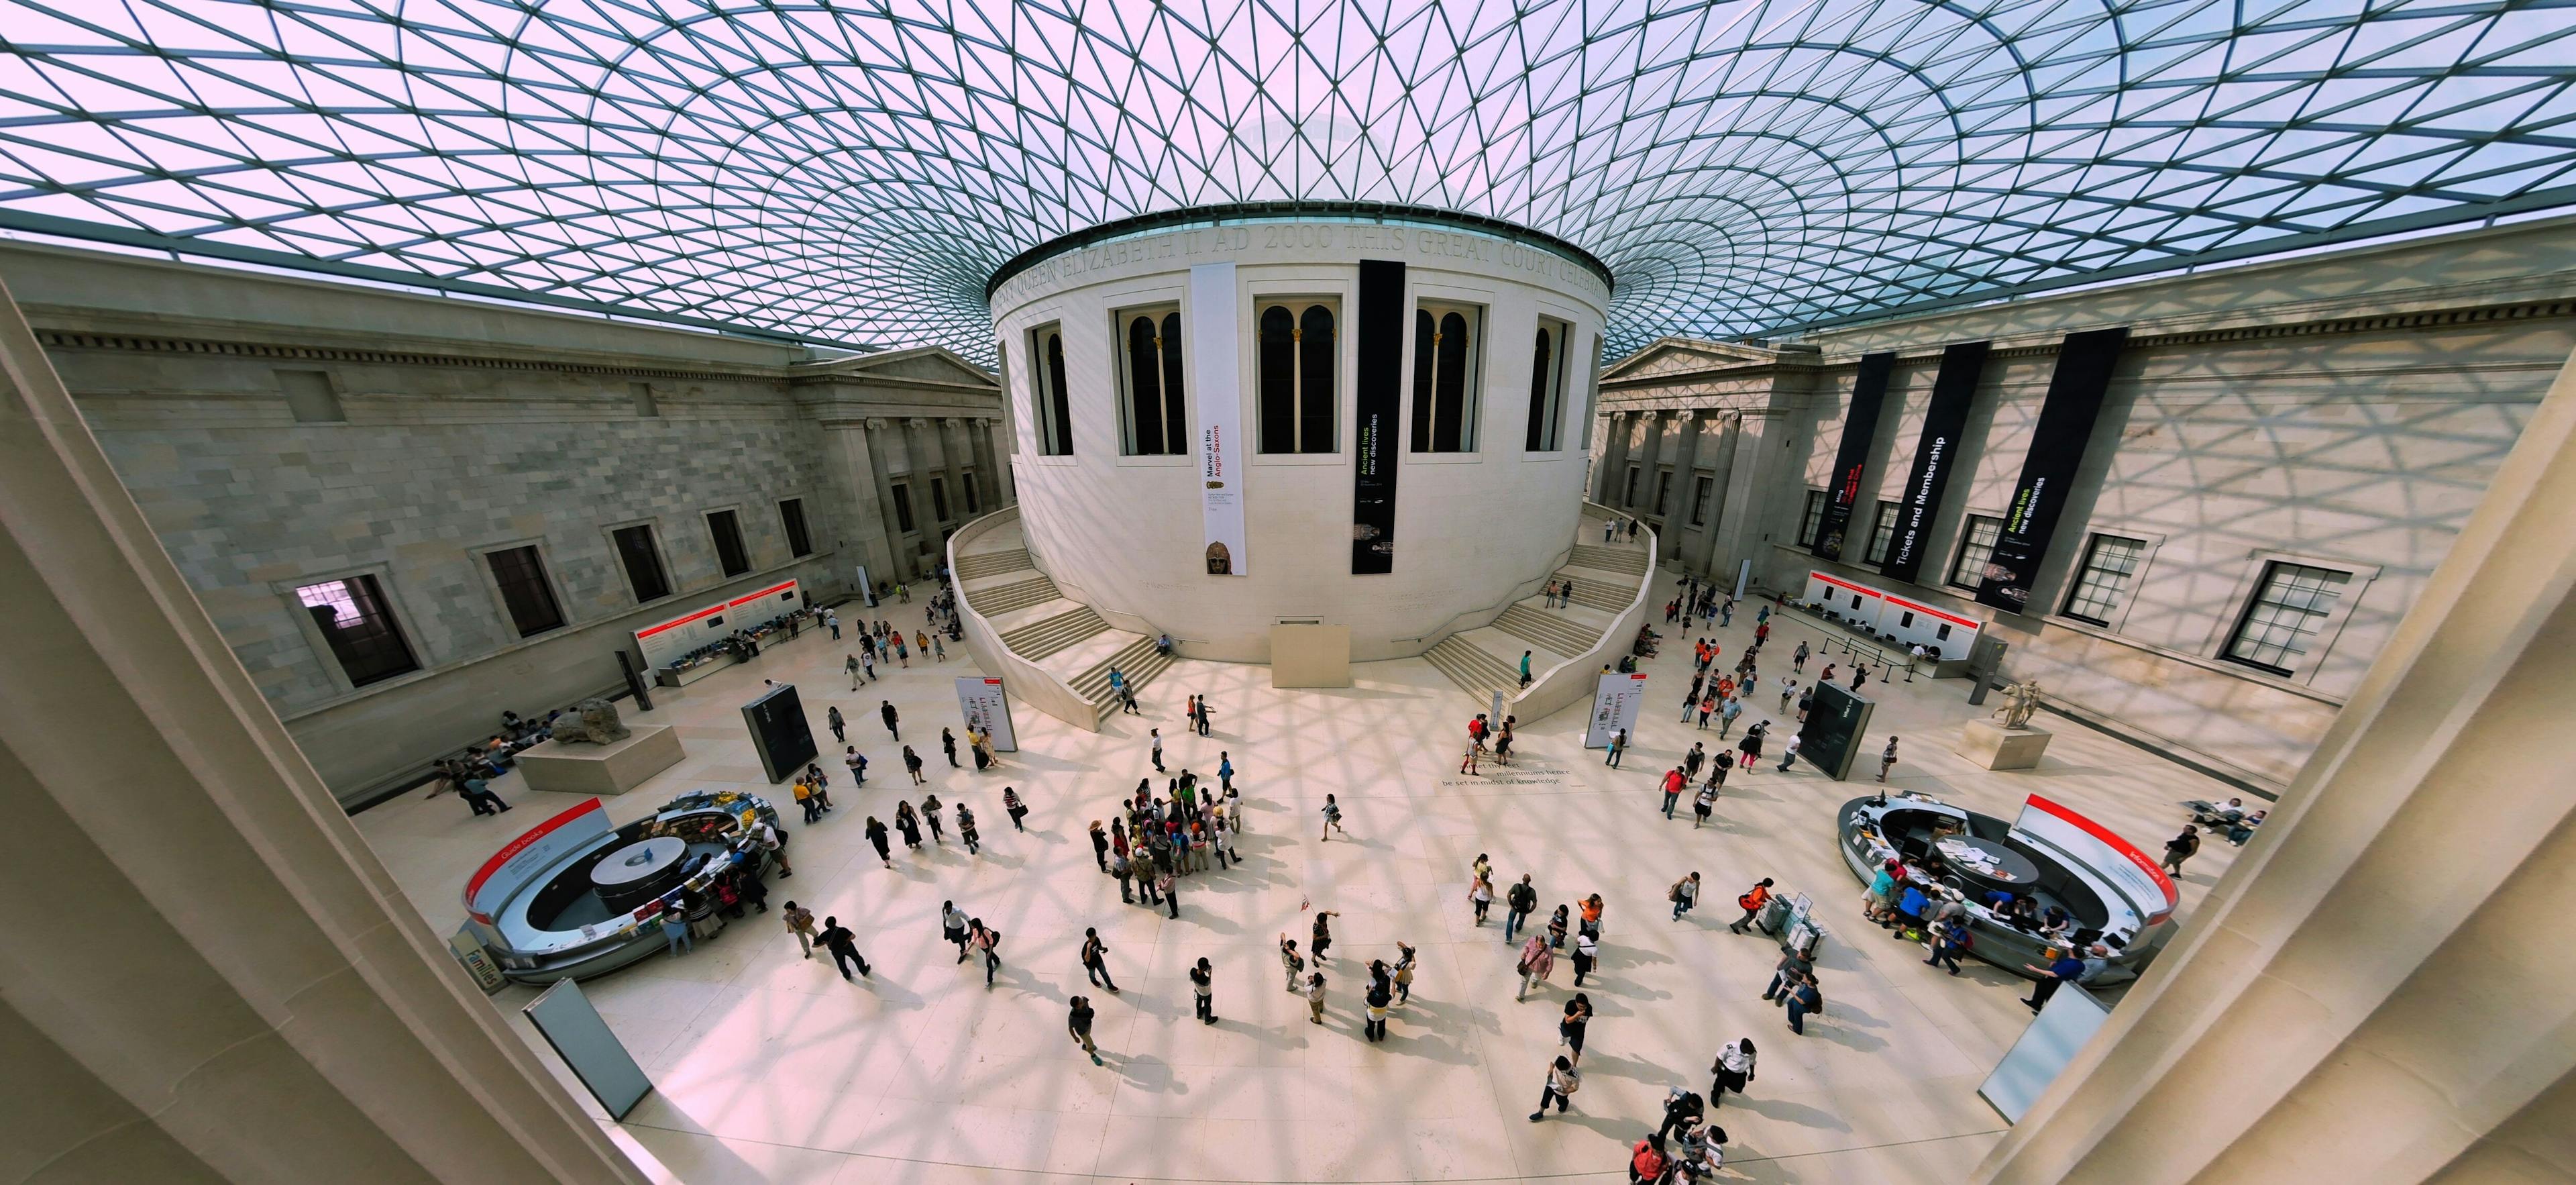 (The British Museum)